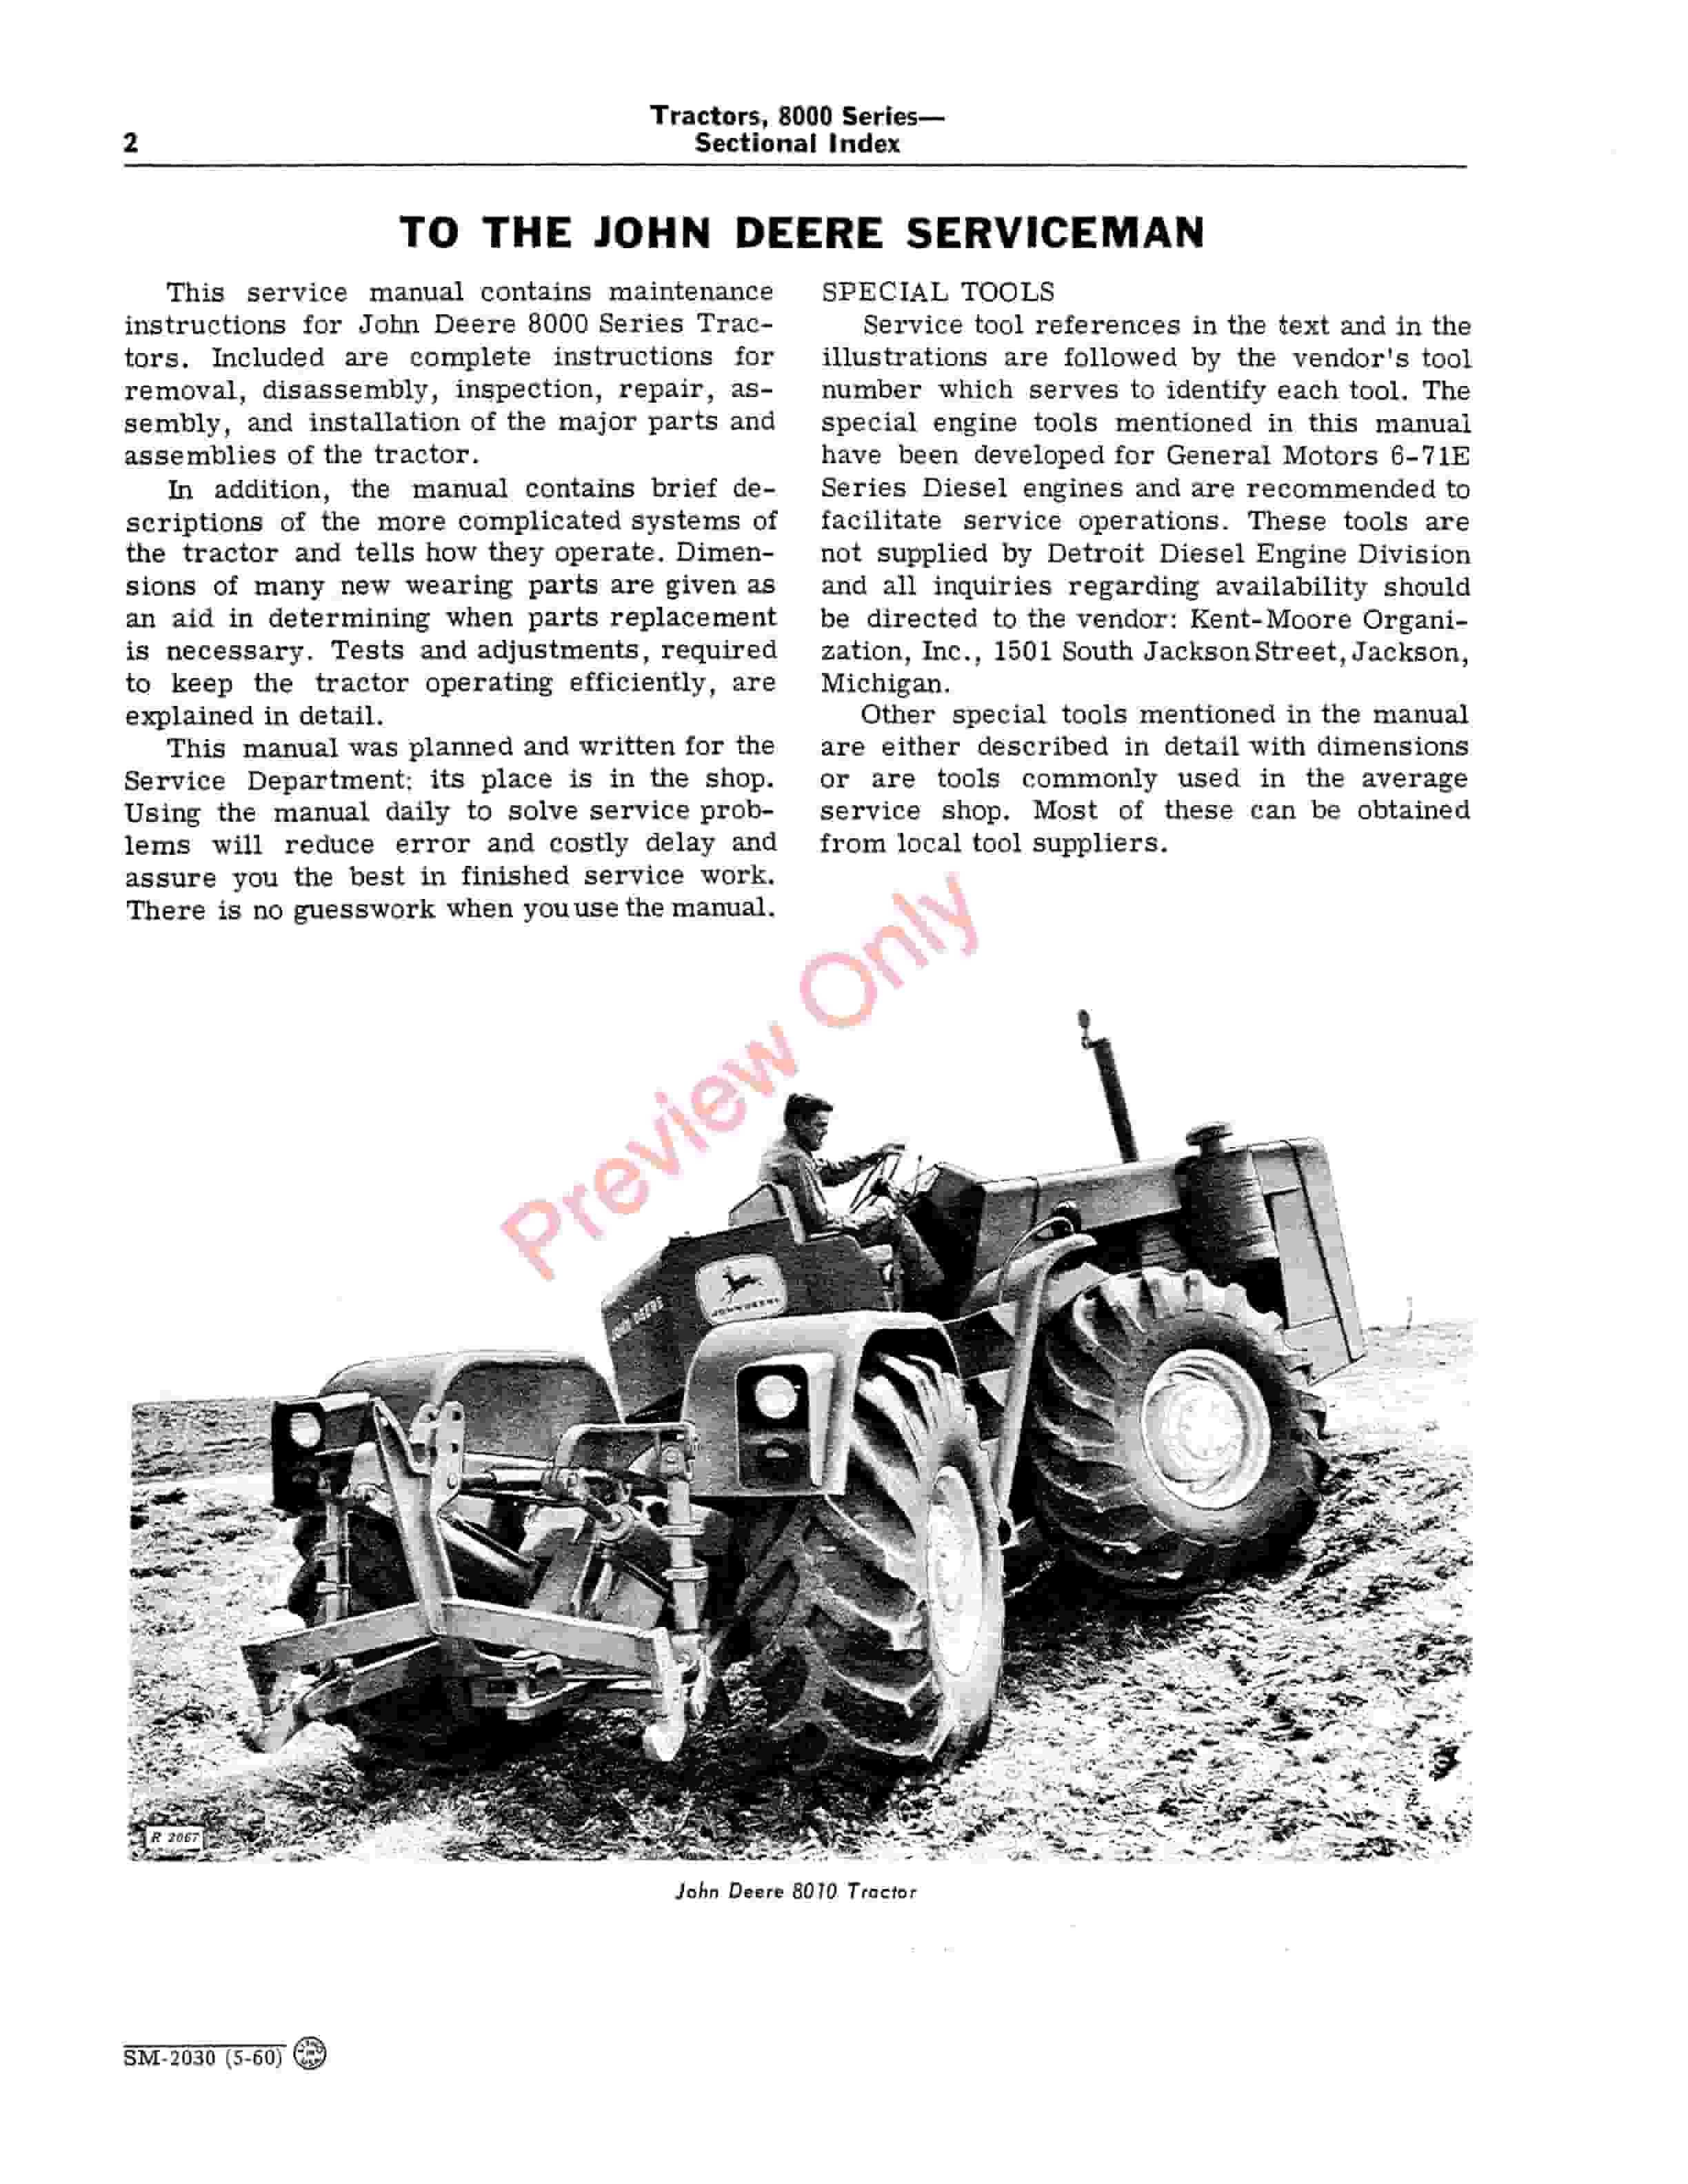 John Deere 8000 Series Tractor Service Manual SM2030 01MAR64 4